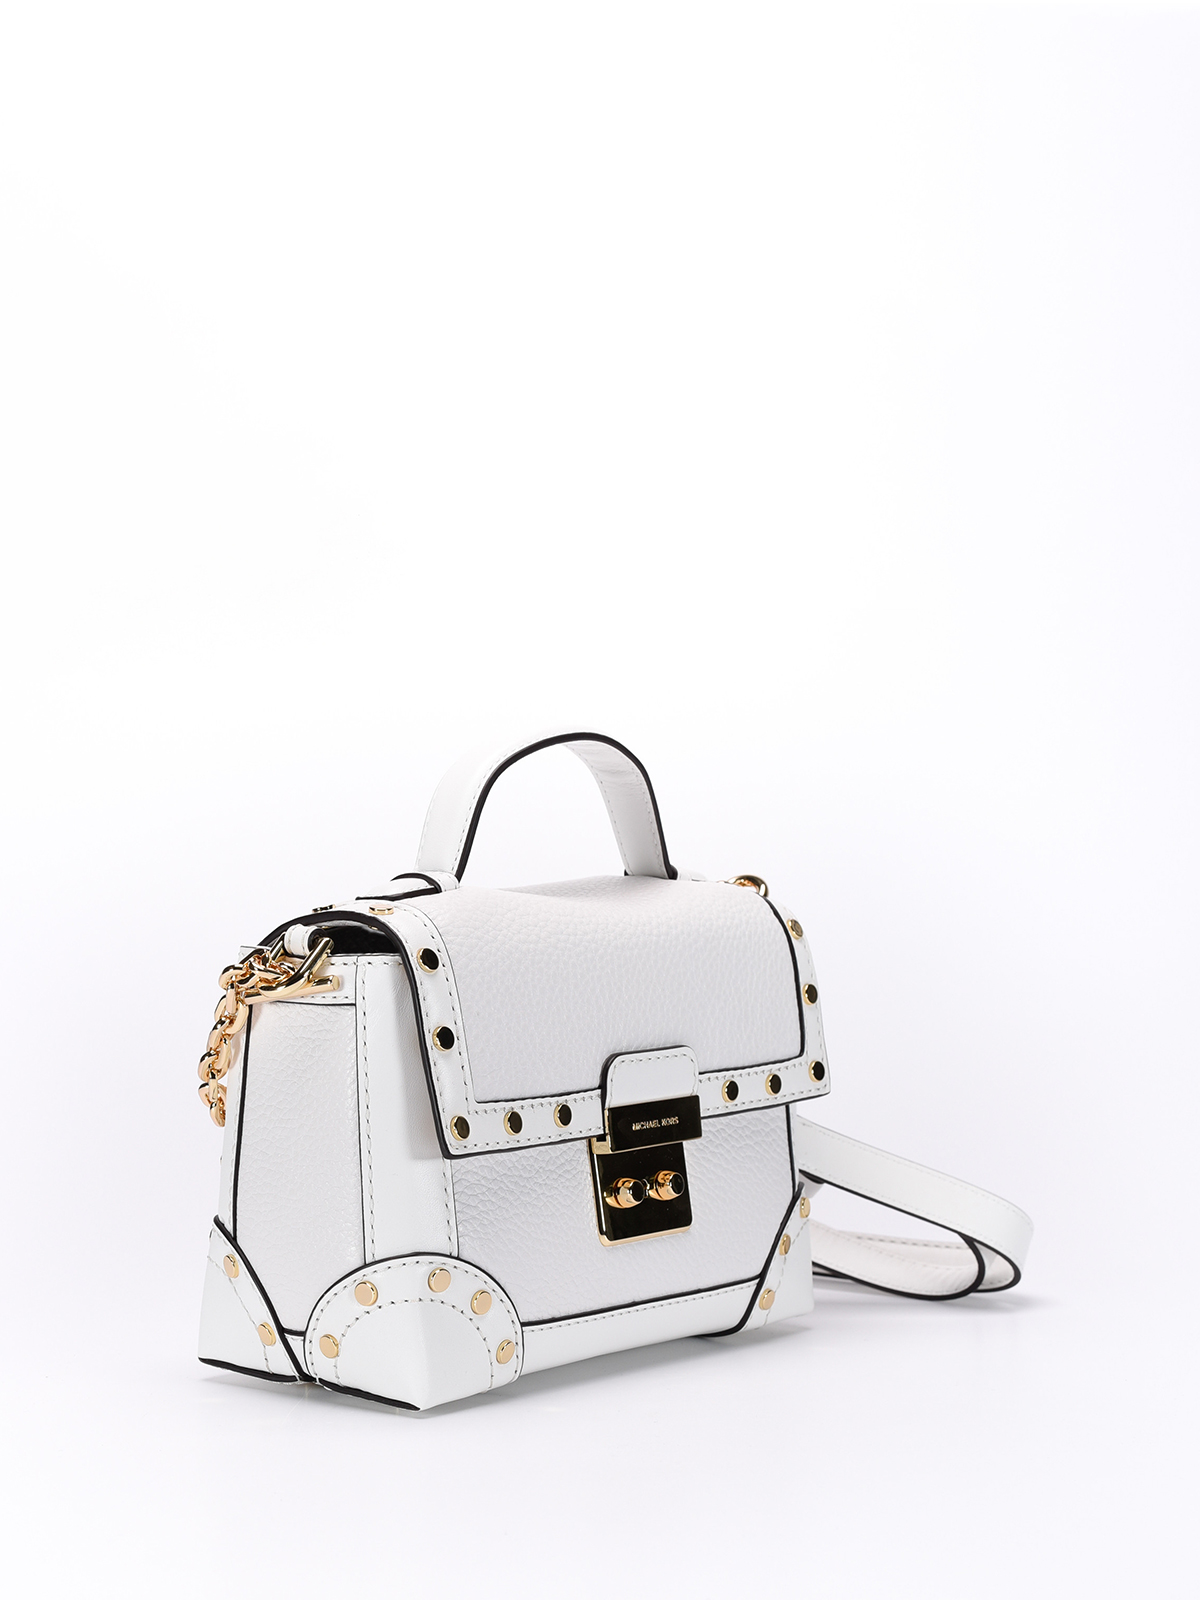 MK white studded purse